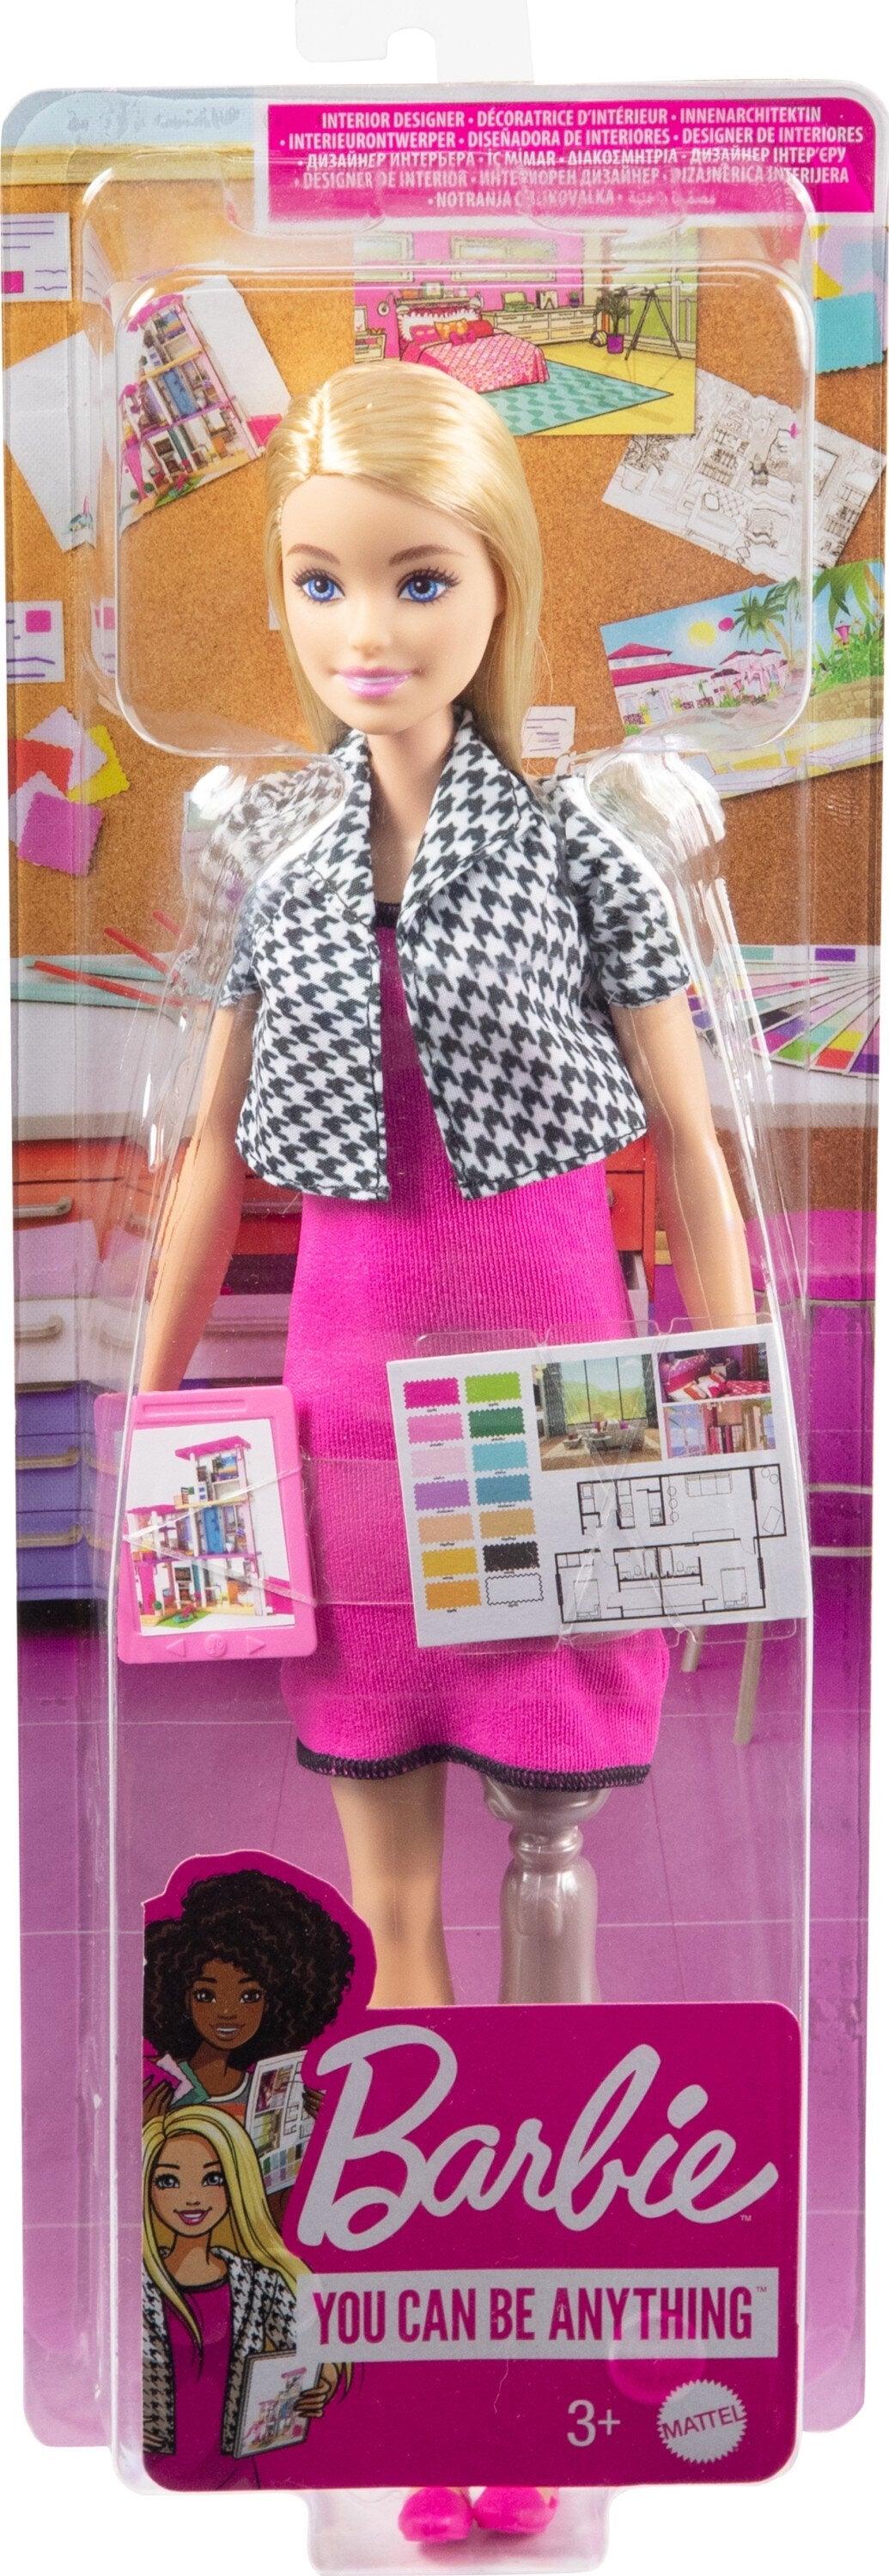 Barbie Interior Design Fashion Doll, Pink Dress & Houndstooth Jacket, Prosthetic Leg & Blonde Hair